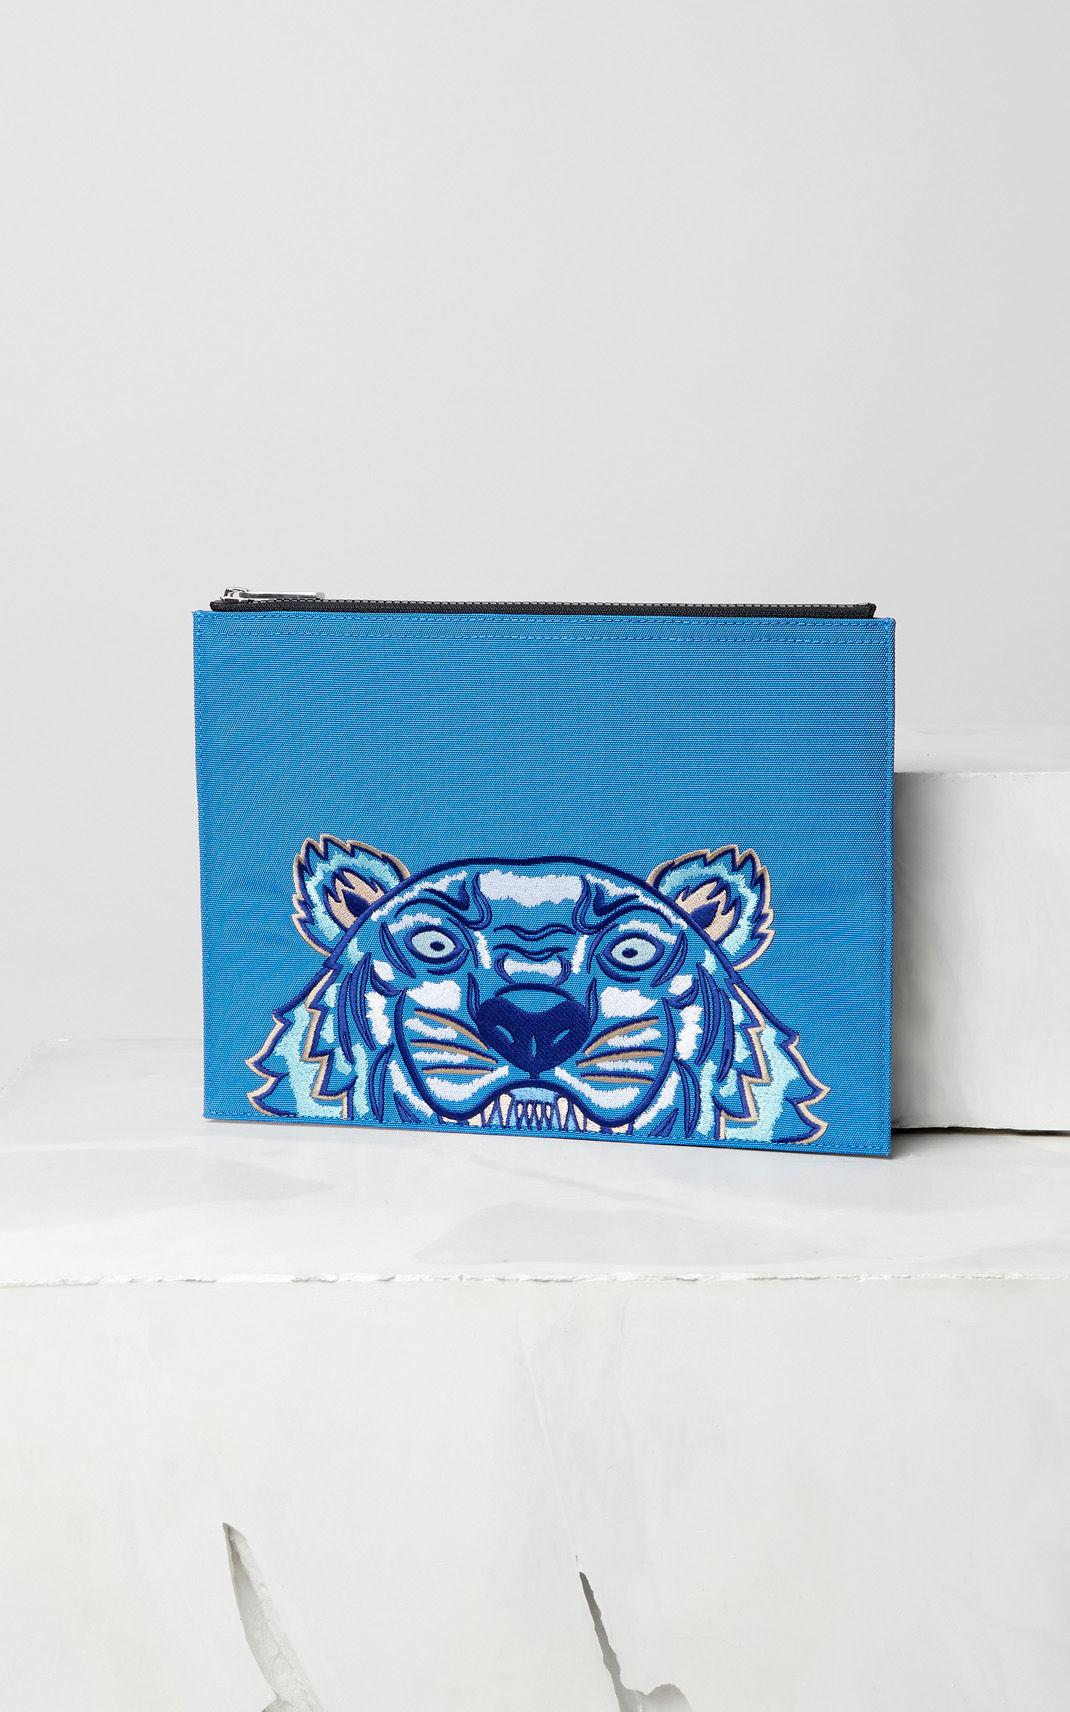 kenzo tiger clutch bag